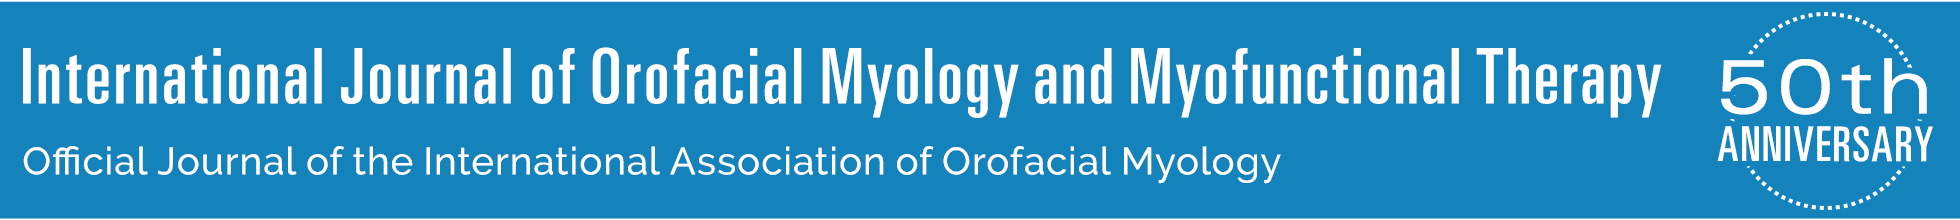 International Journal of Orofacial Myology and Myofunctional Therapy